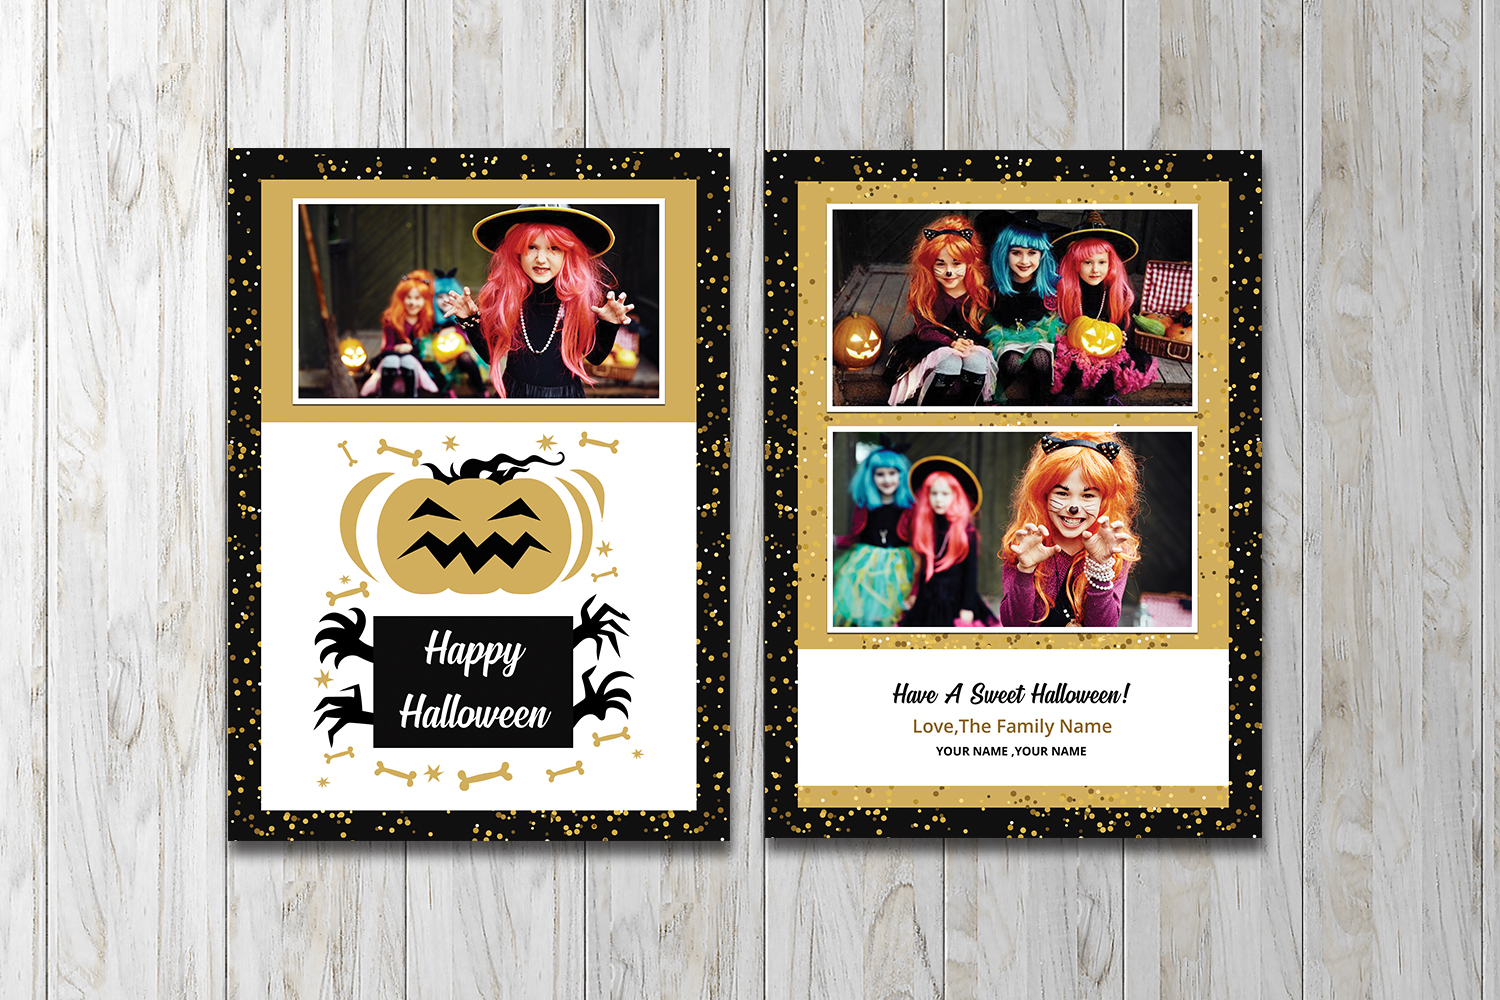 Halloween Greeting Card Corporate Identity Template